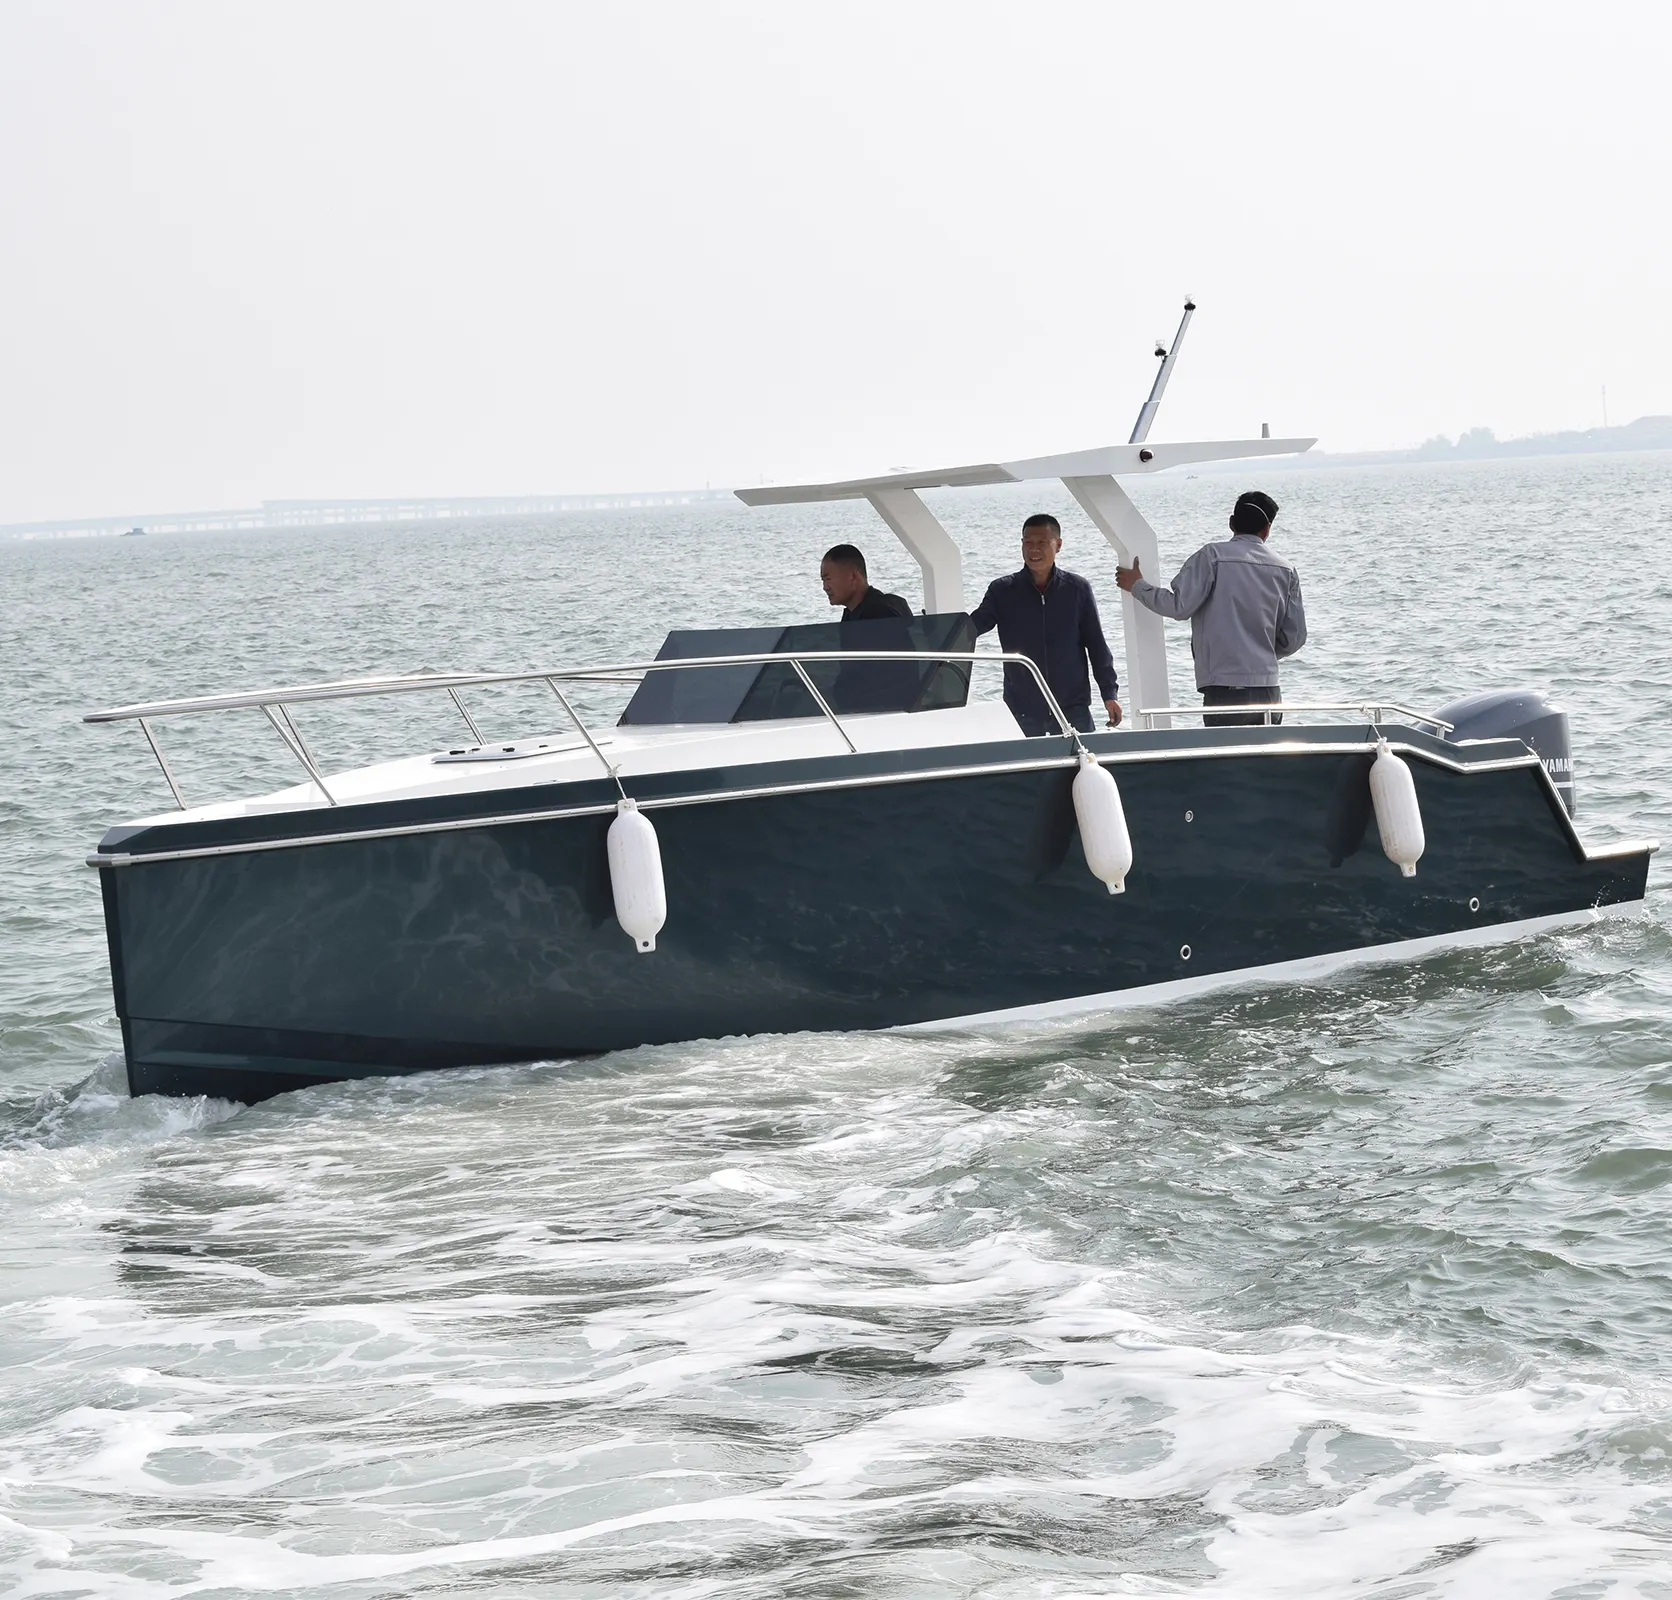 Galaxy barco de fibra de vidro 7.8m, barco de pesca de fibra de vidro para passageiros, entretenimento e pesca